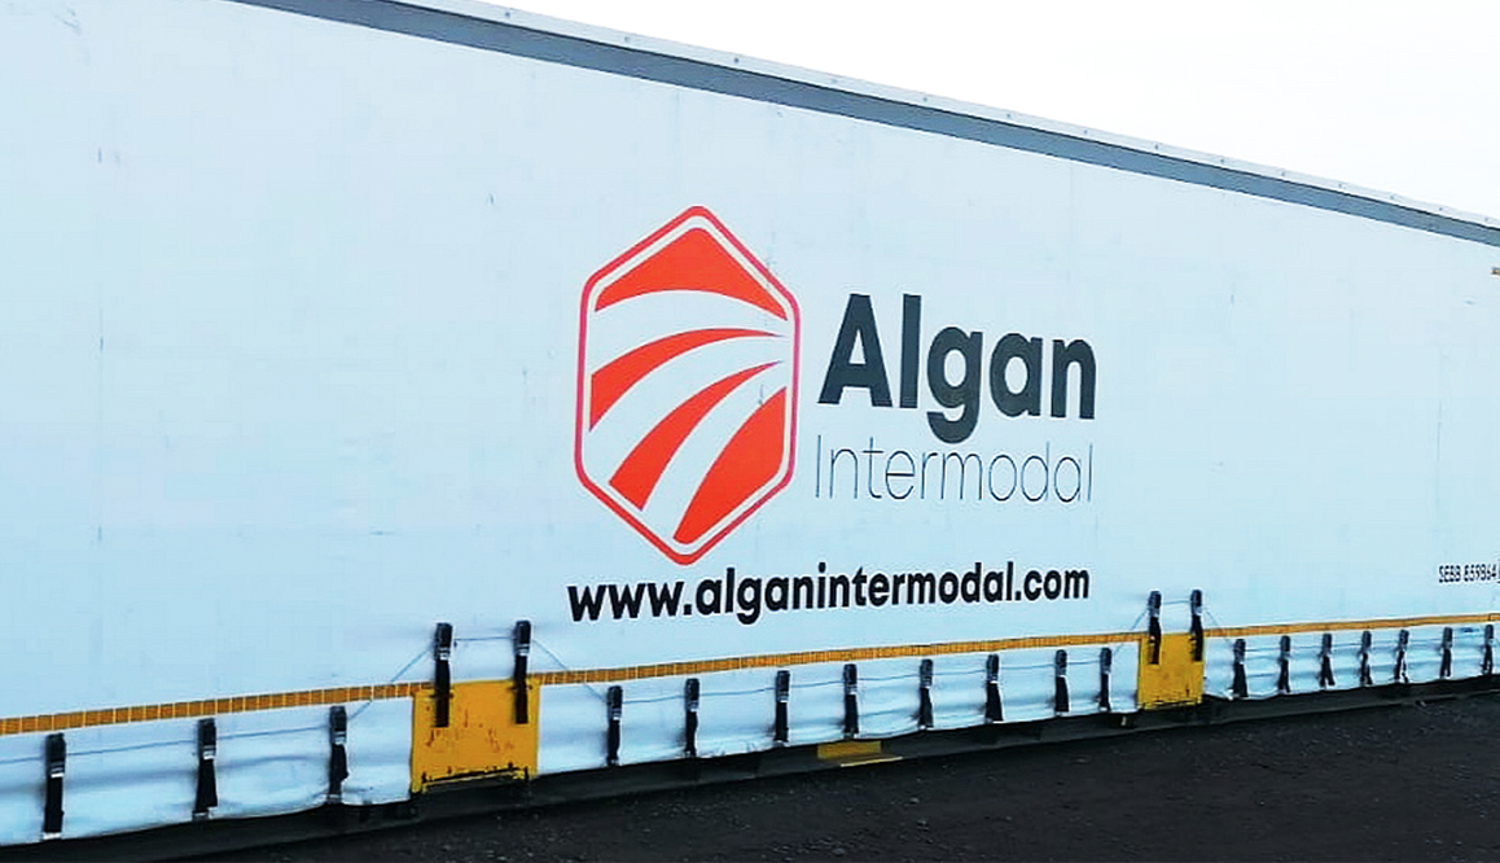 Algan Intermodal